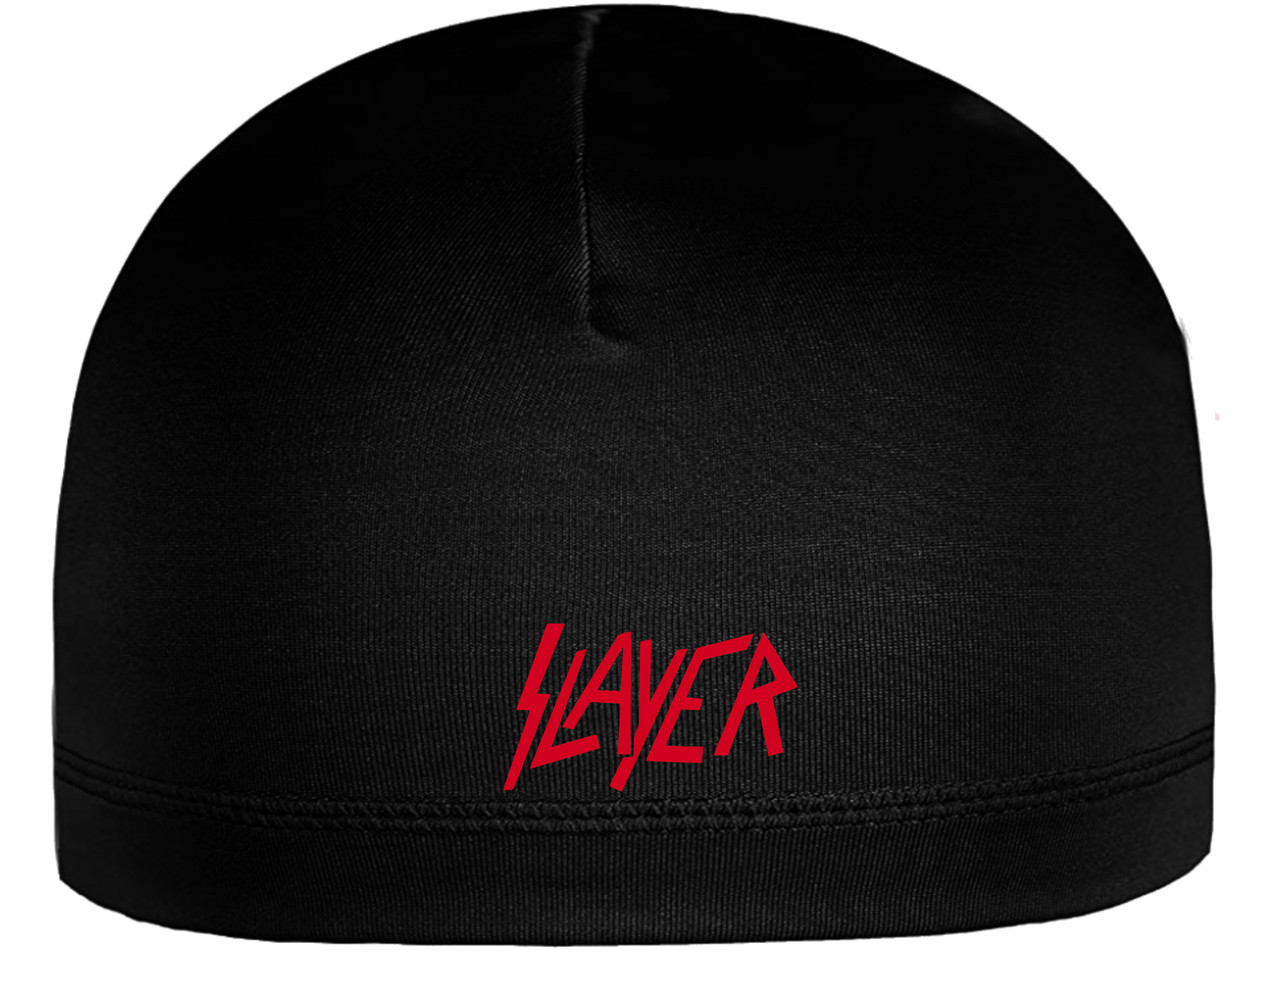 Slayer Speed Thrash Metal Adult Rock & Roll Skull Beanie Cap Helmet Liner